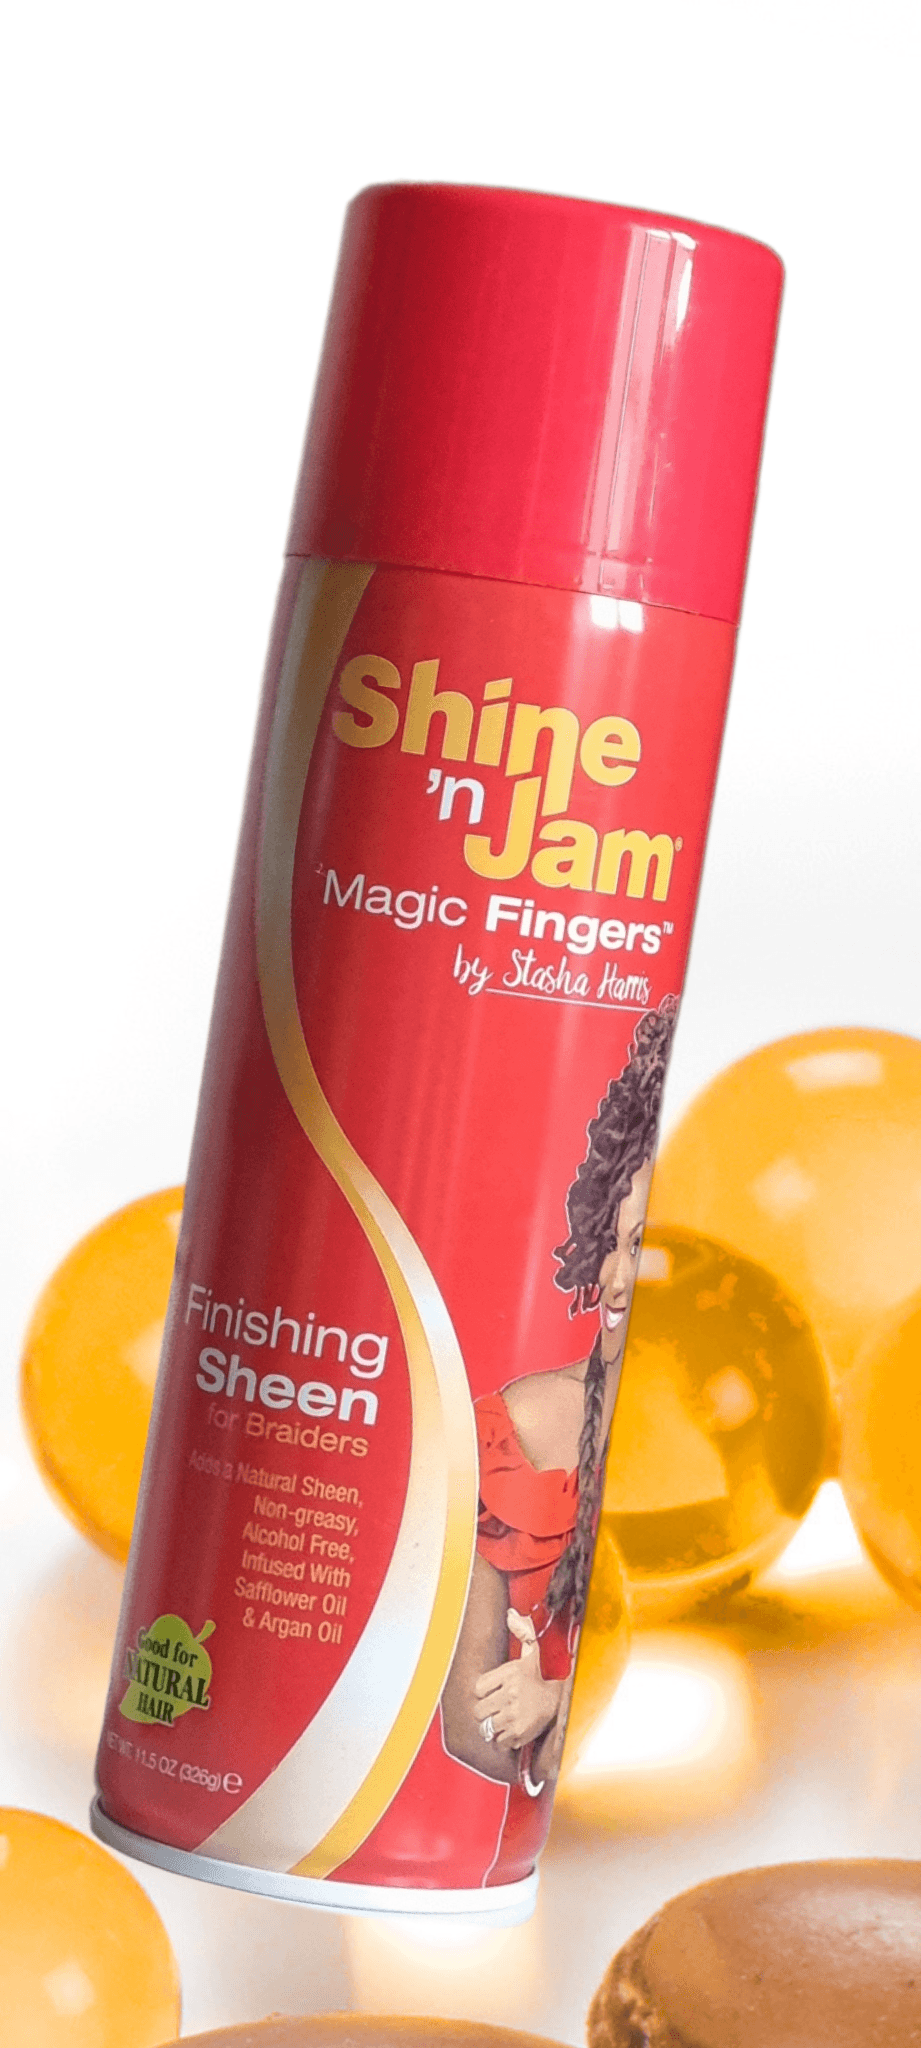 Shine N Jam Magic Fingers Finishing Sheen - LocsNco